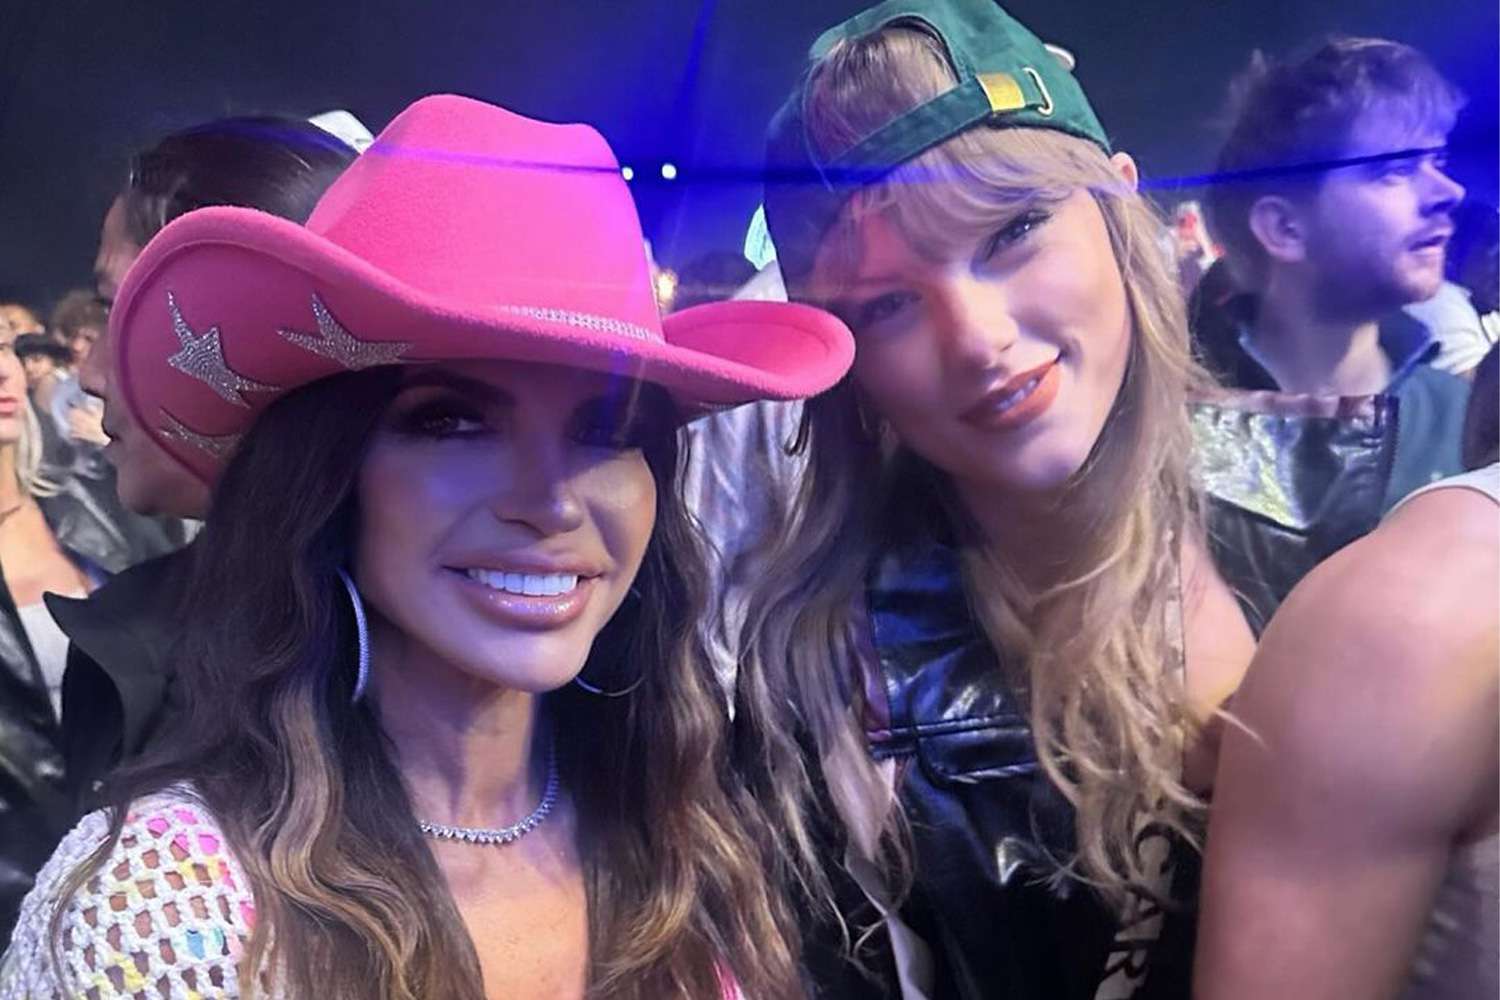 Teresa Giudice Asked Taylor Swift 'Do You Know Who I Am?' Before Taking Coachella Photo Together